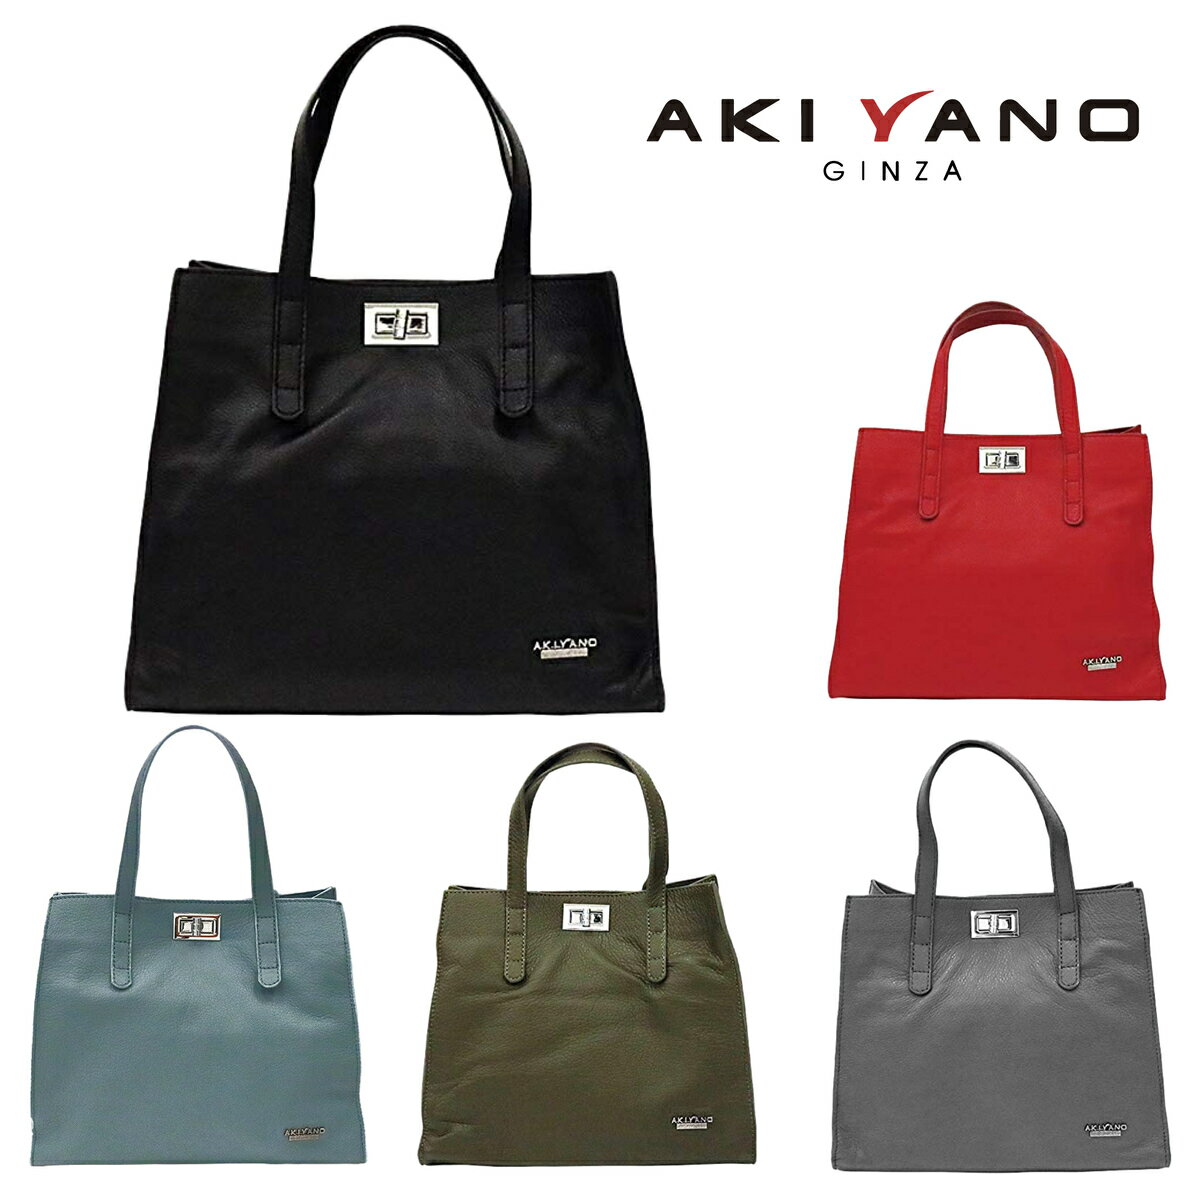 【AKIYANO】【品名：AY8900】ハンドバッグ HAND BAG【Red、Black、Green、Light Blue、Gray】5Color、天然牛革使用